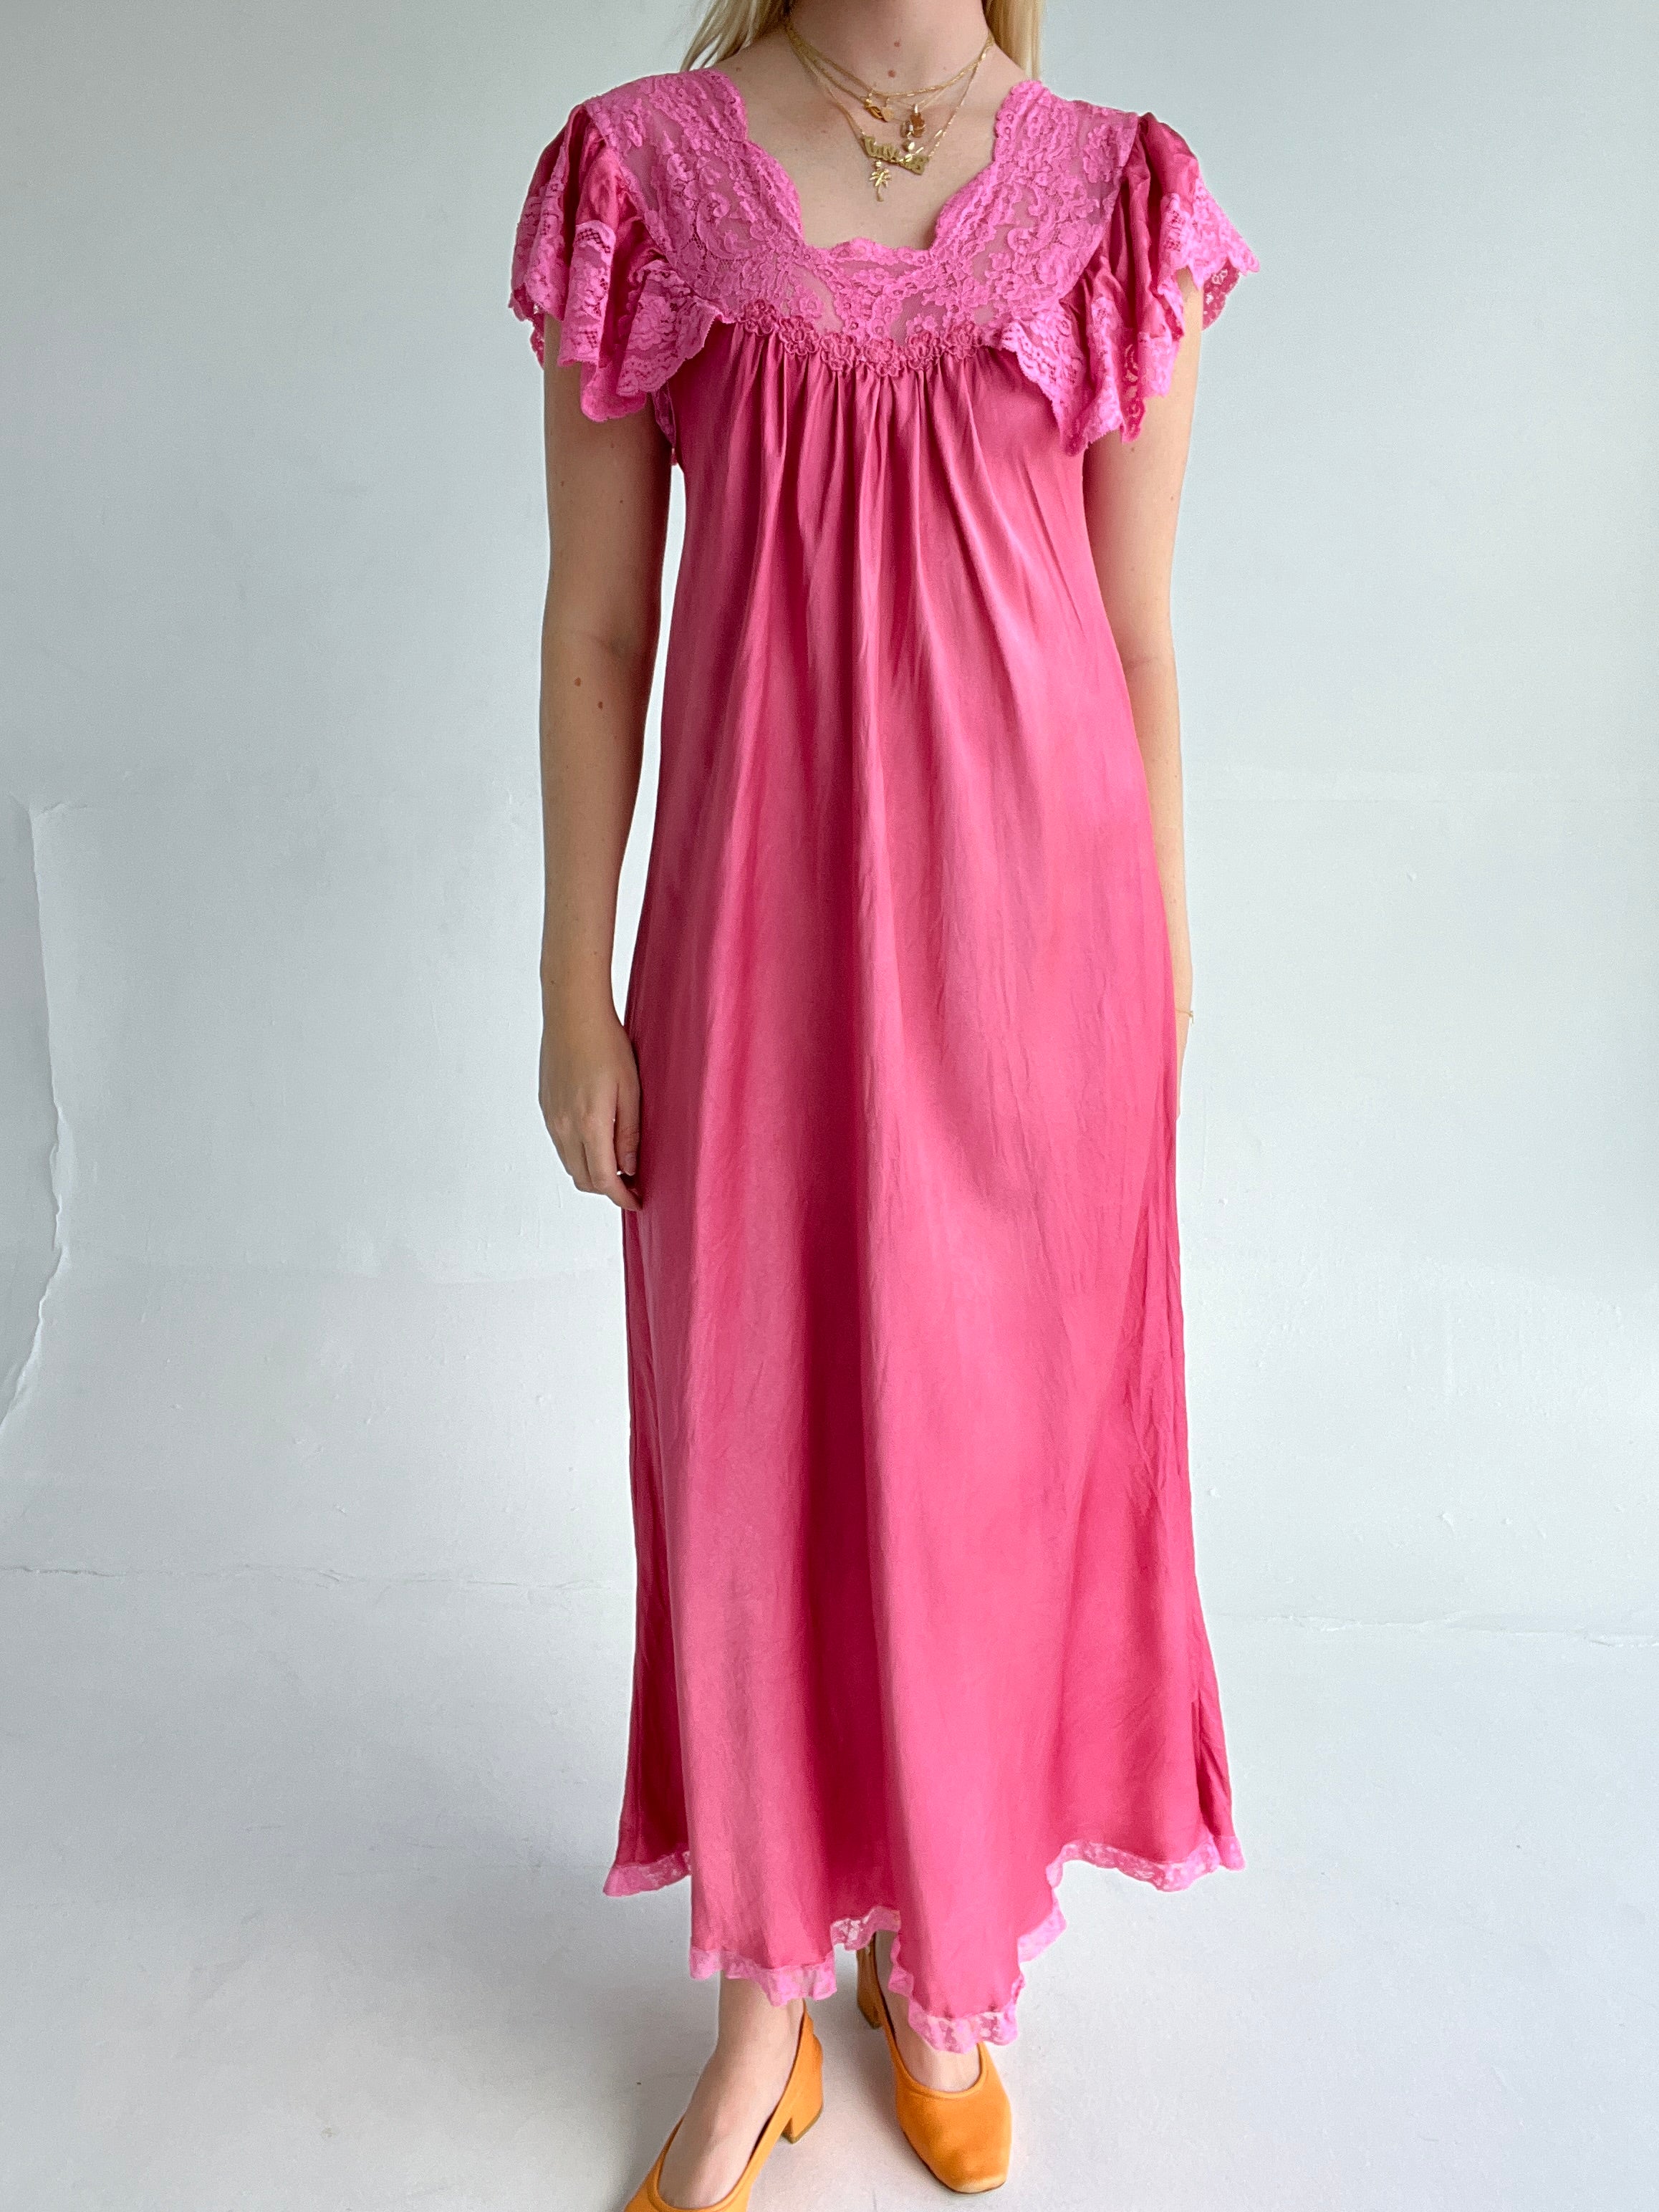 Hand Dyed Pink Silk Dress